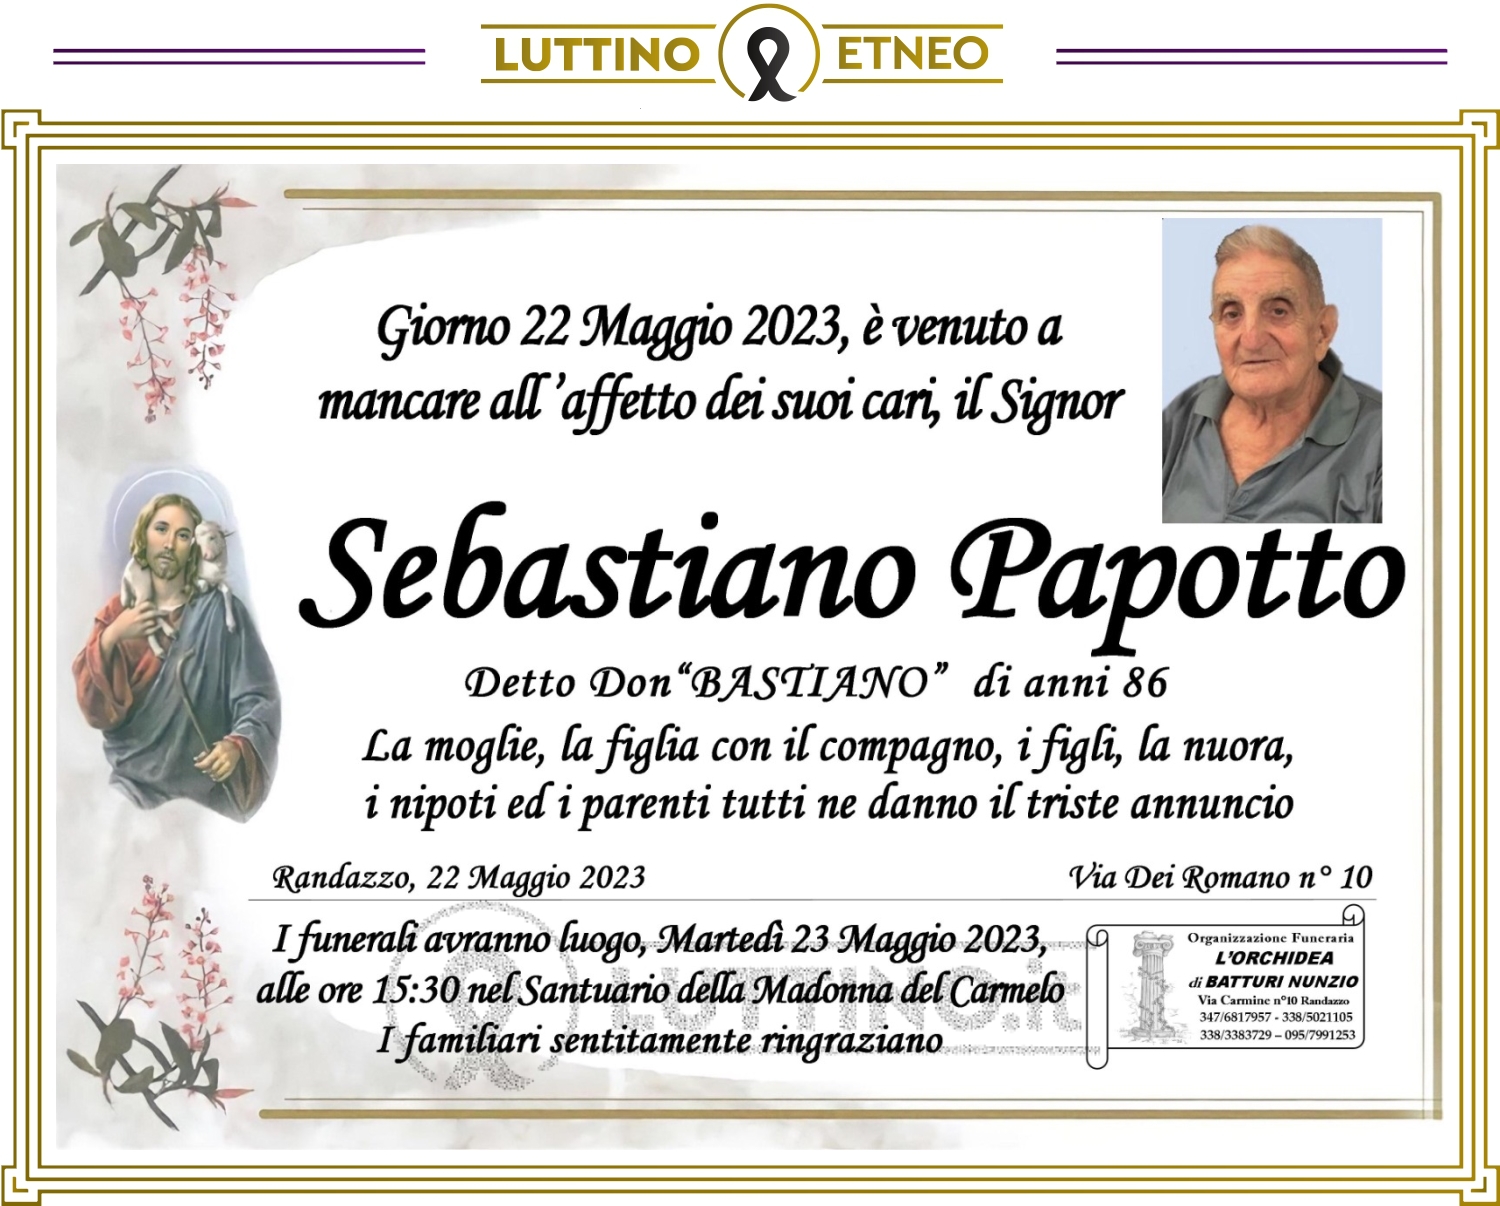 Sebastiano Papotto